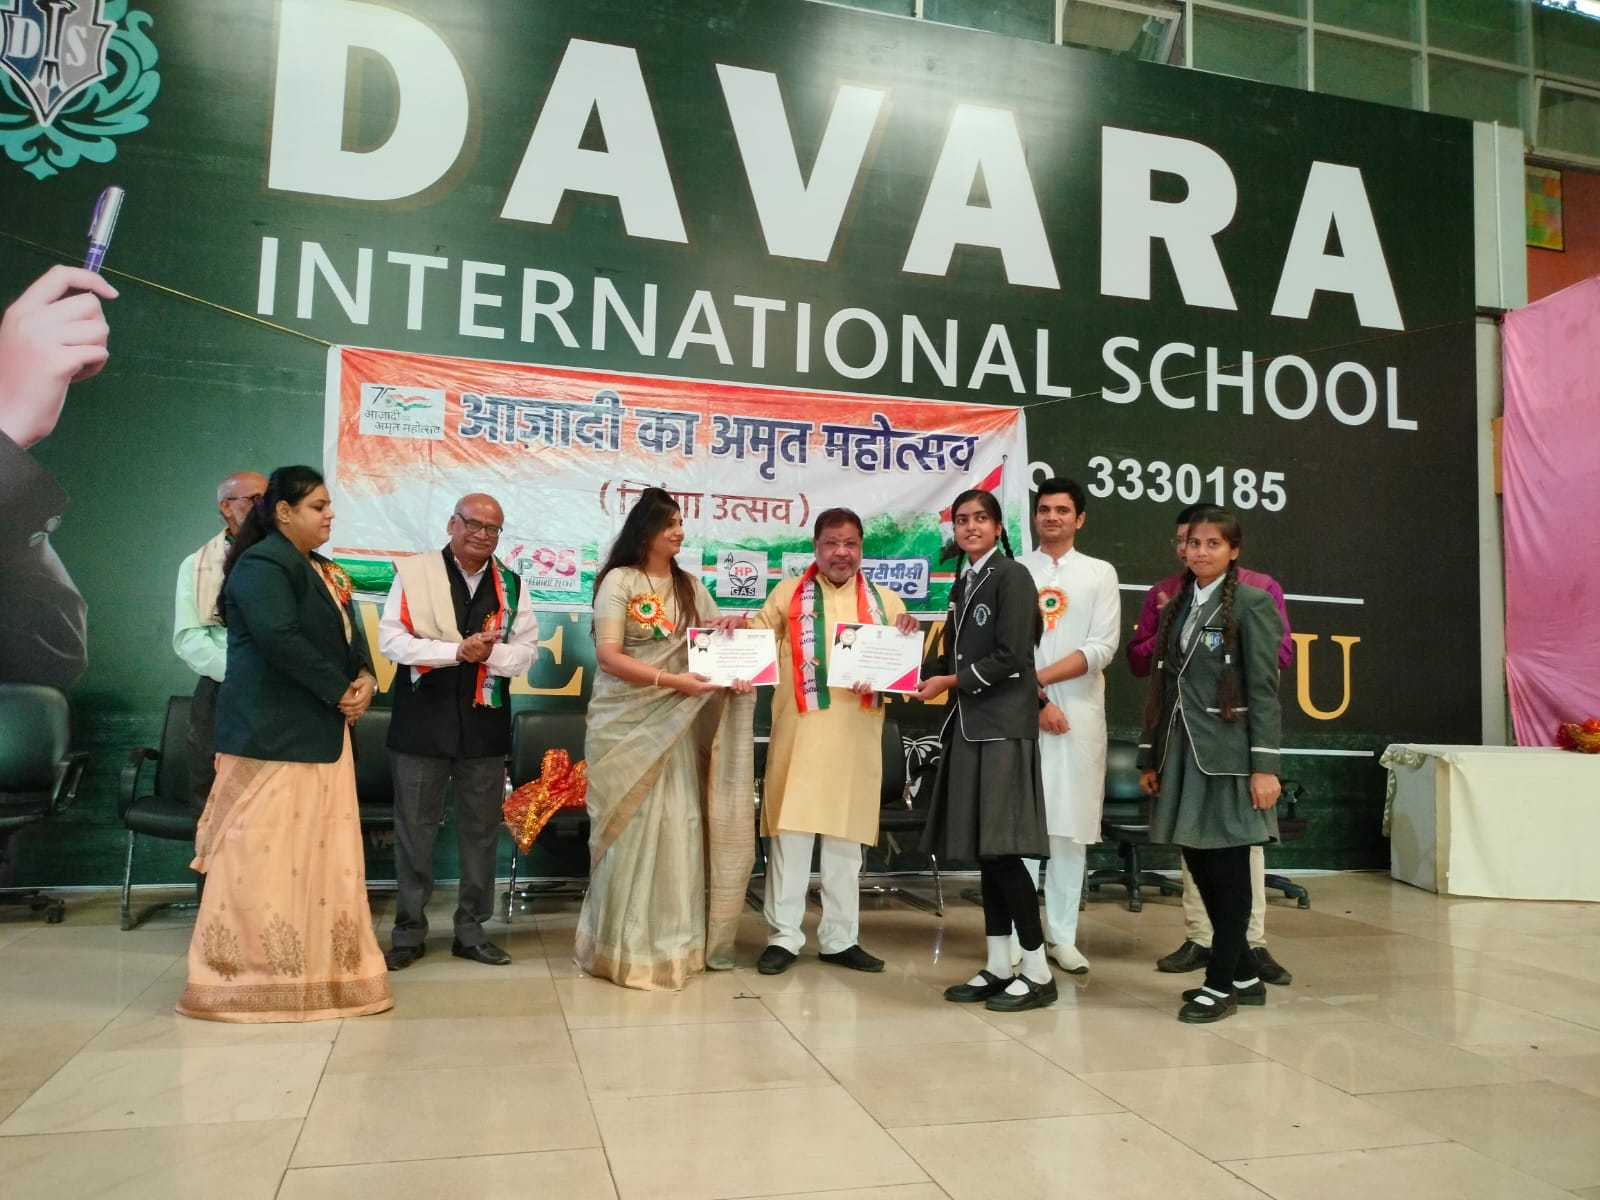  Davara International School